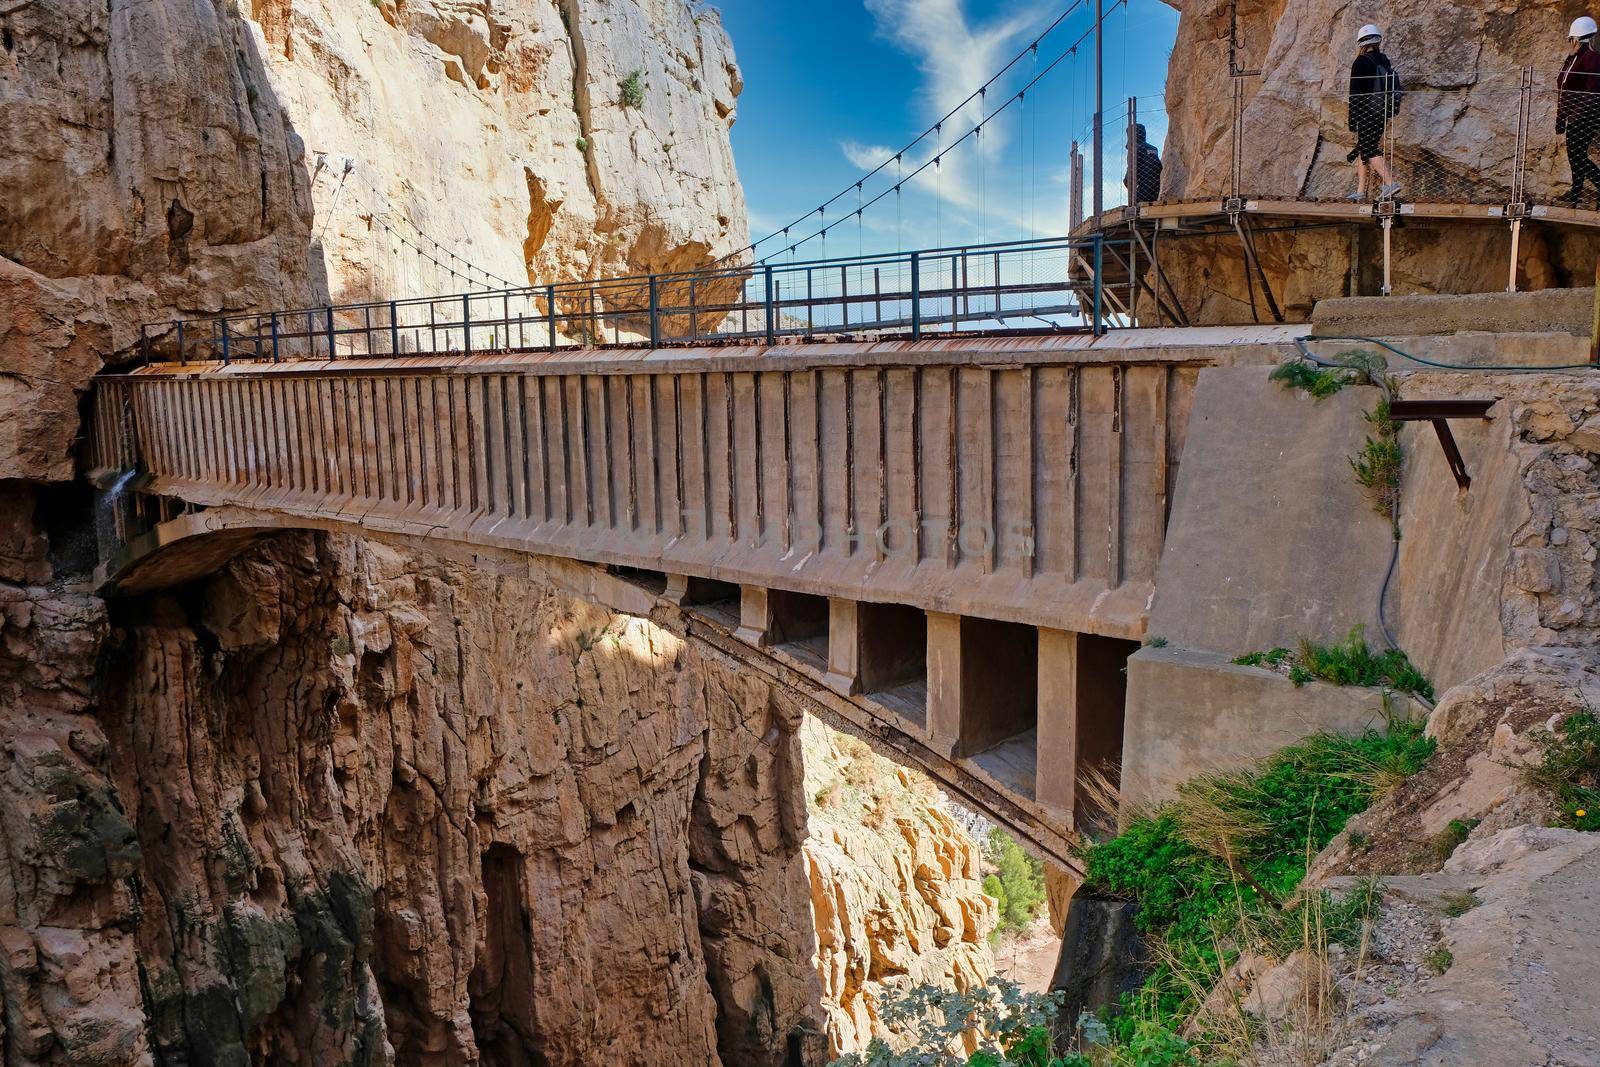 Caminito del Rey gorge in Malaga (Spain) by JCVSTOCK